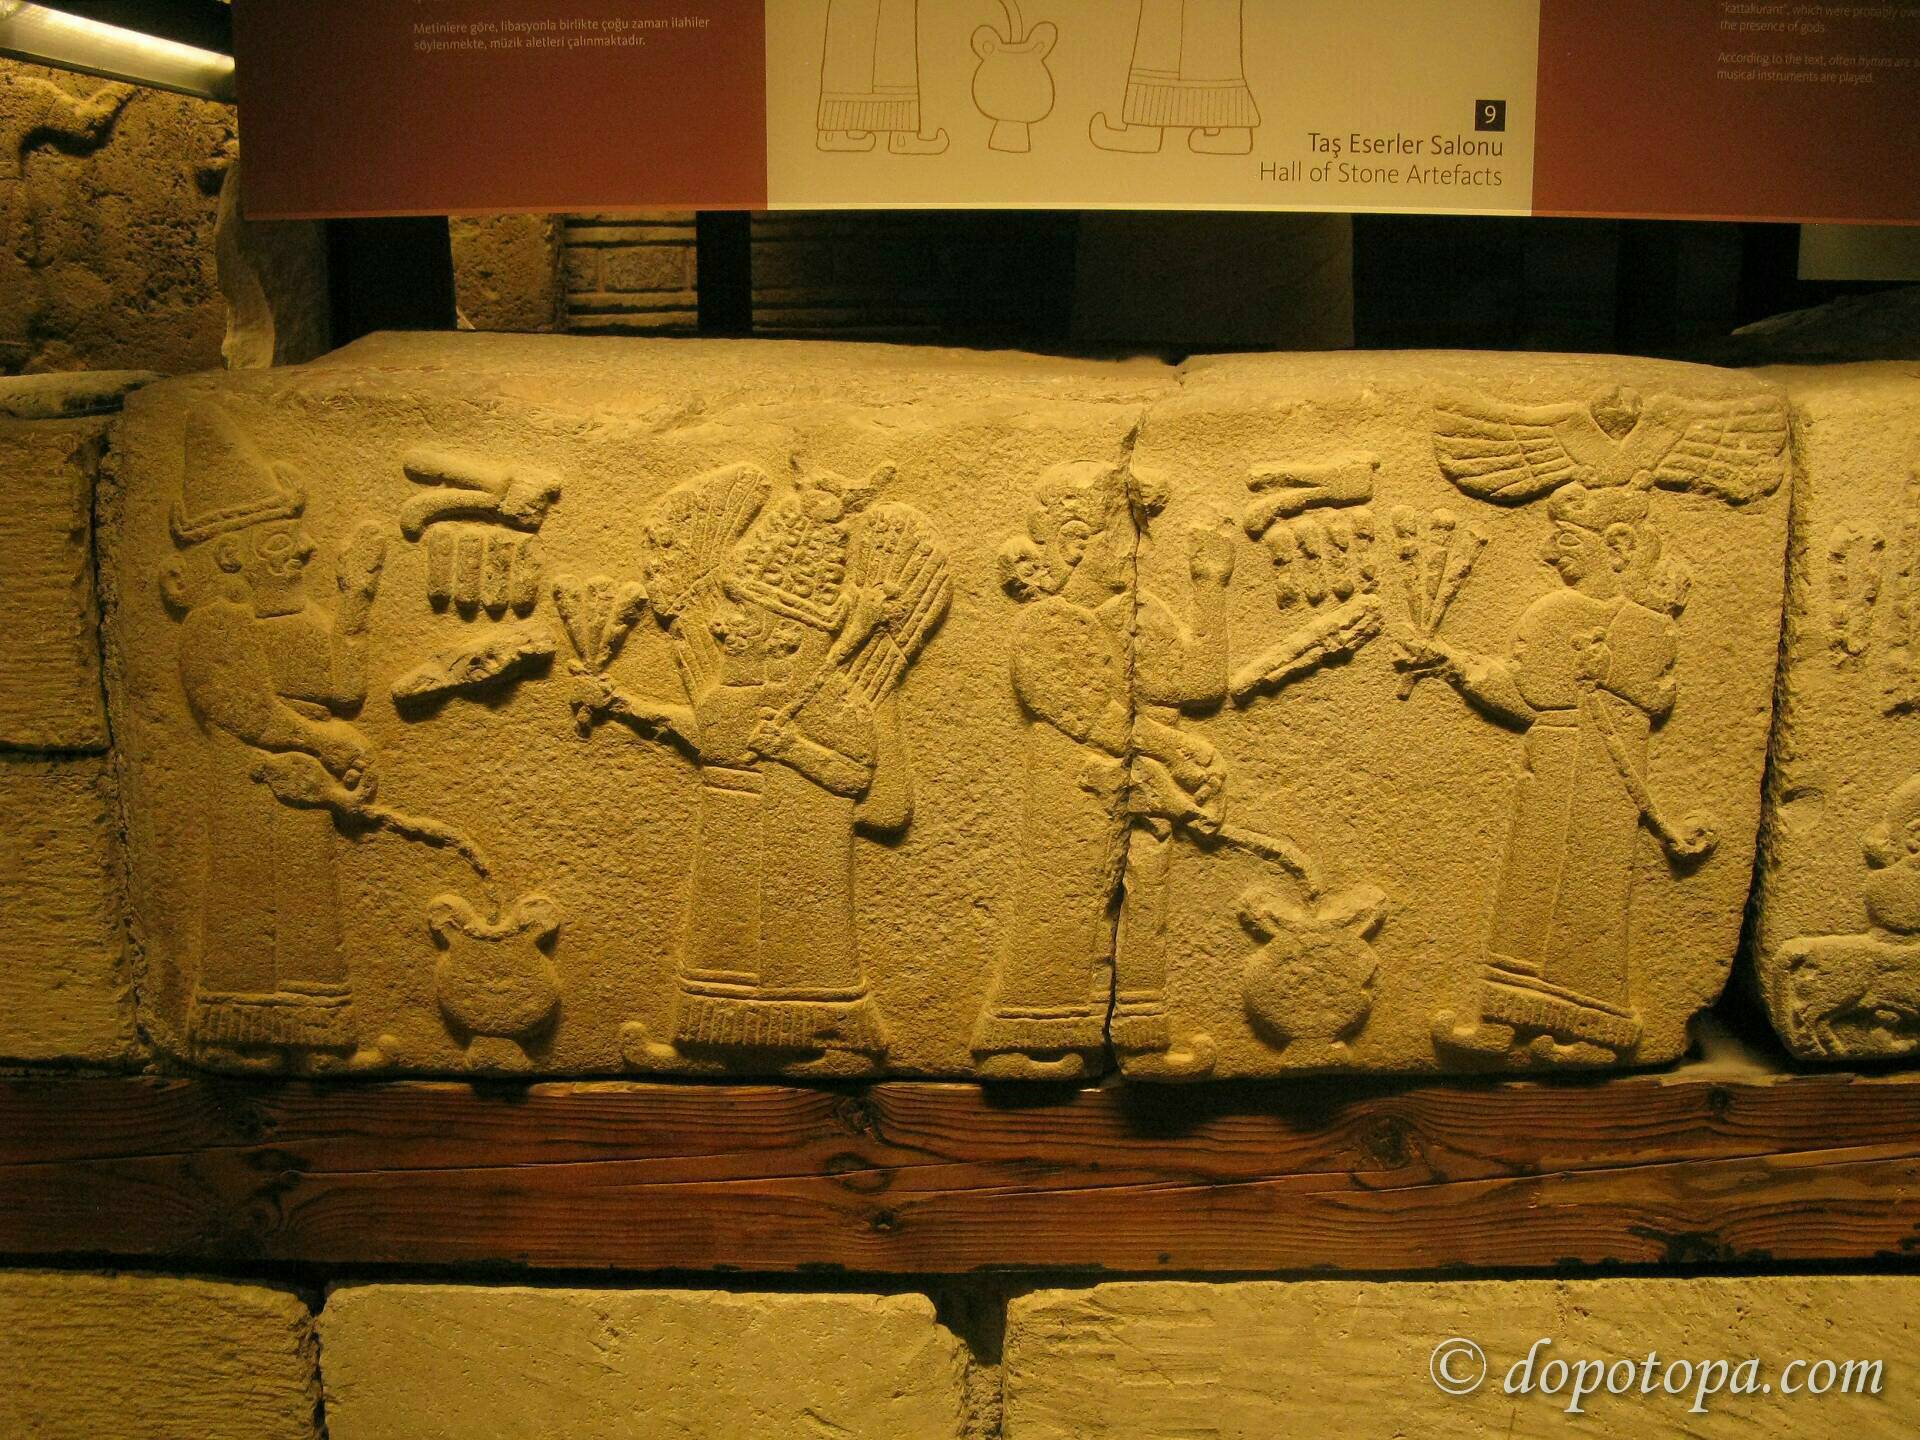 ankara_museum_stone_artefacts_12.JPG